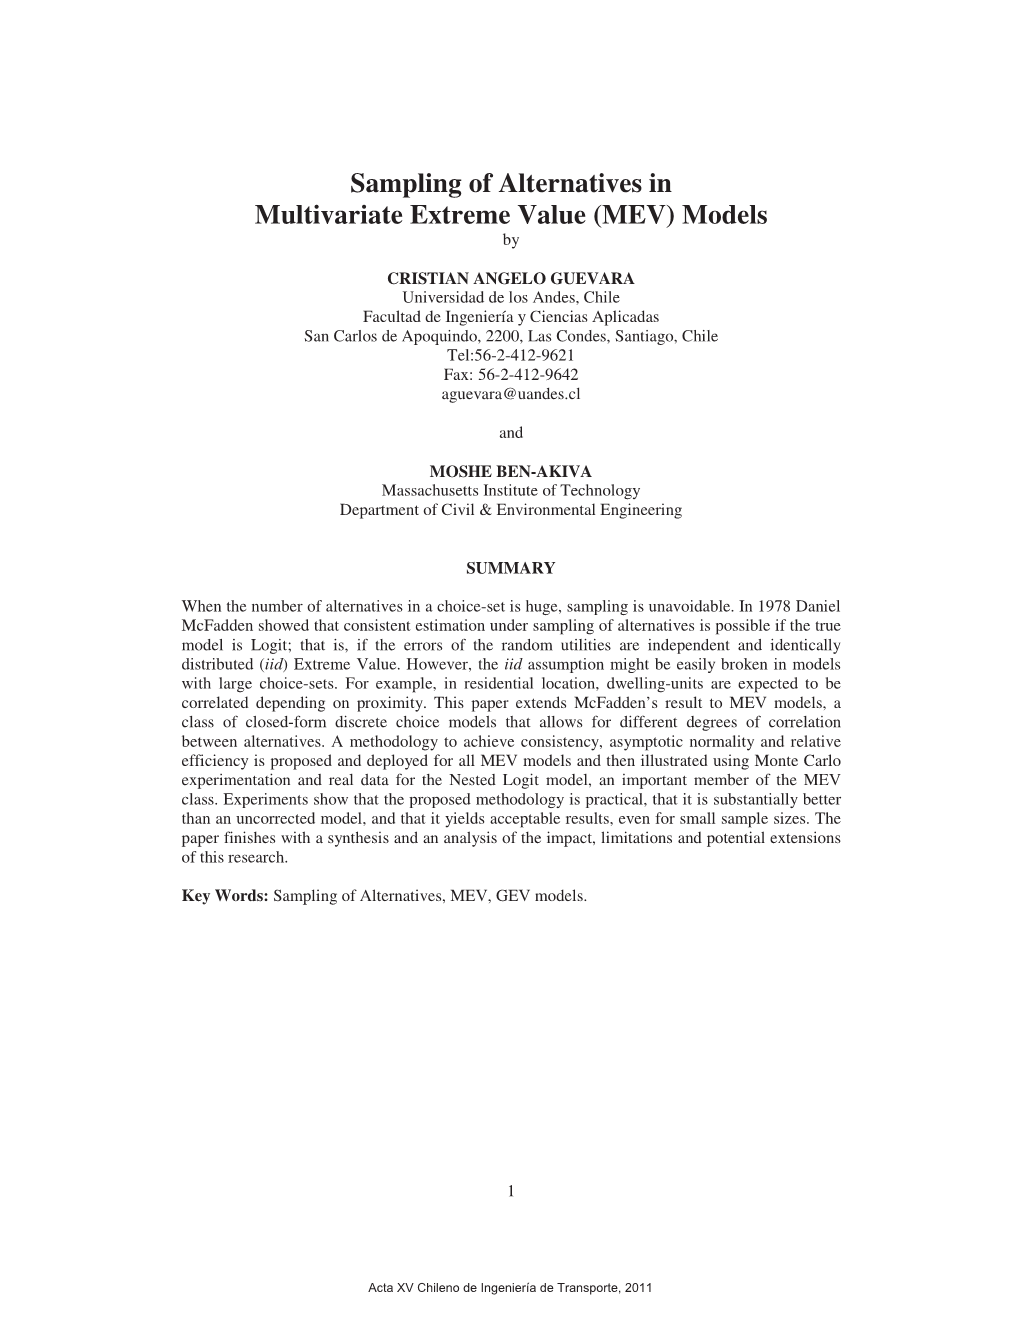 Sampling of Alternatives in Multivariate Extreme Value (MEV) Models By